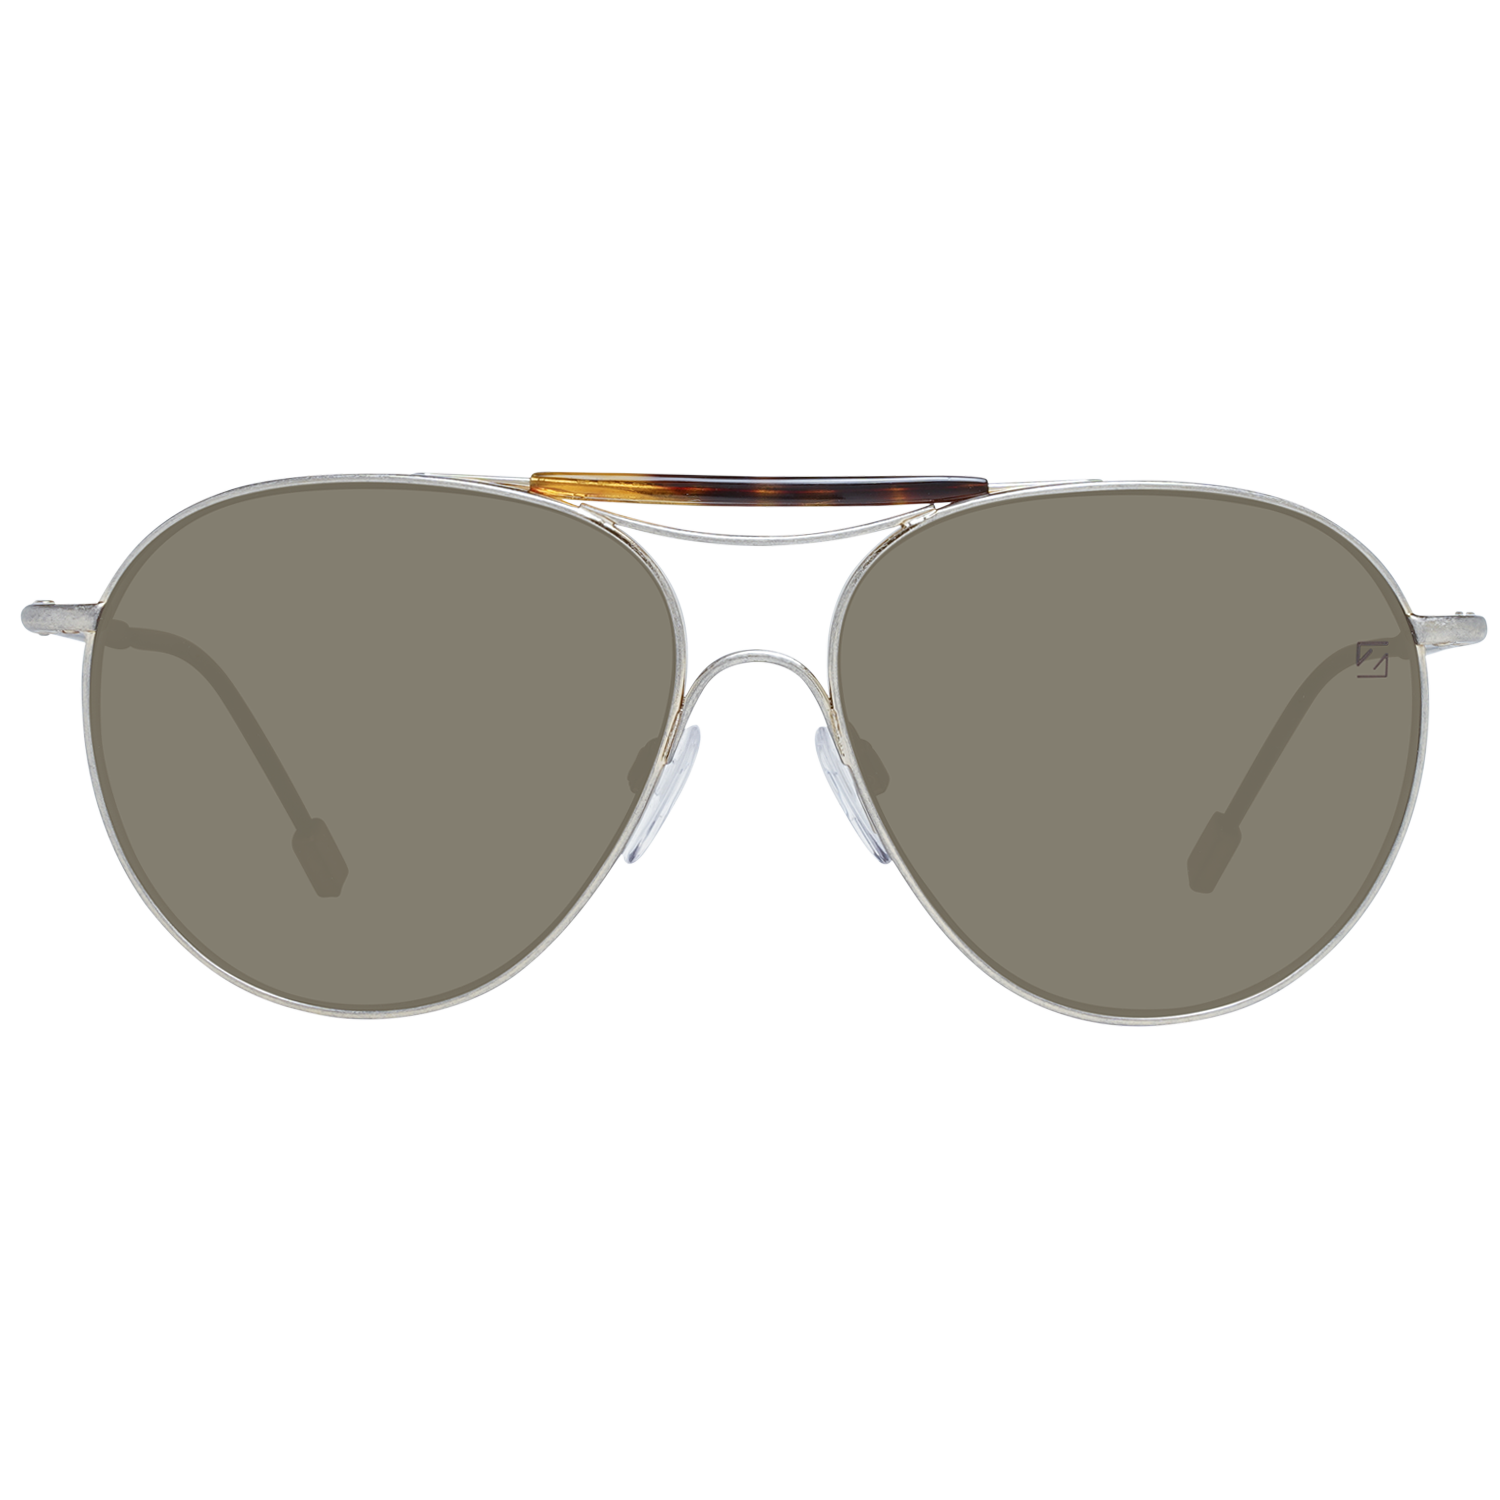 Zegna Couture Sunglasses Zegna Couture Sunglasses ZC0021 57 29J Titanium Eyeglasses Eyewear UK USA Australia 